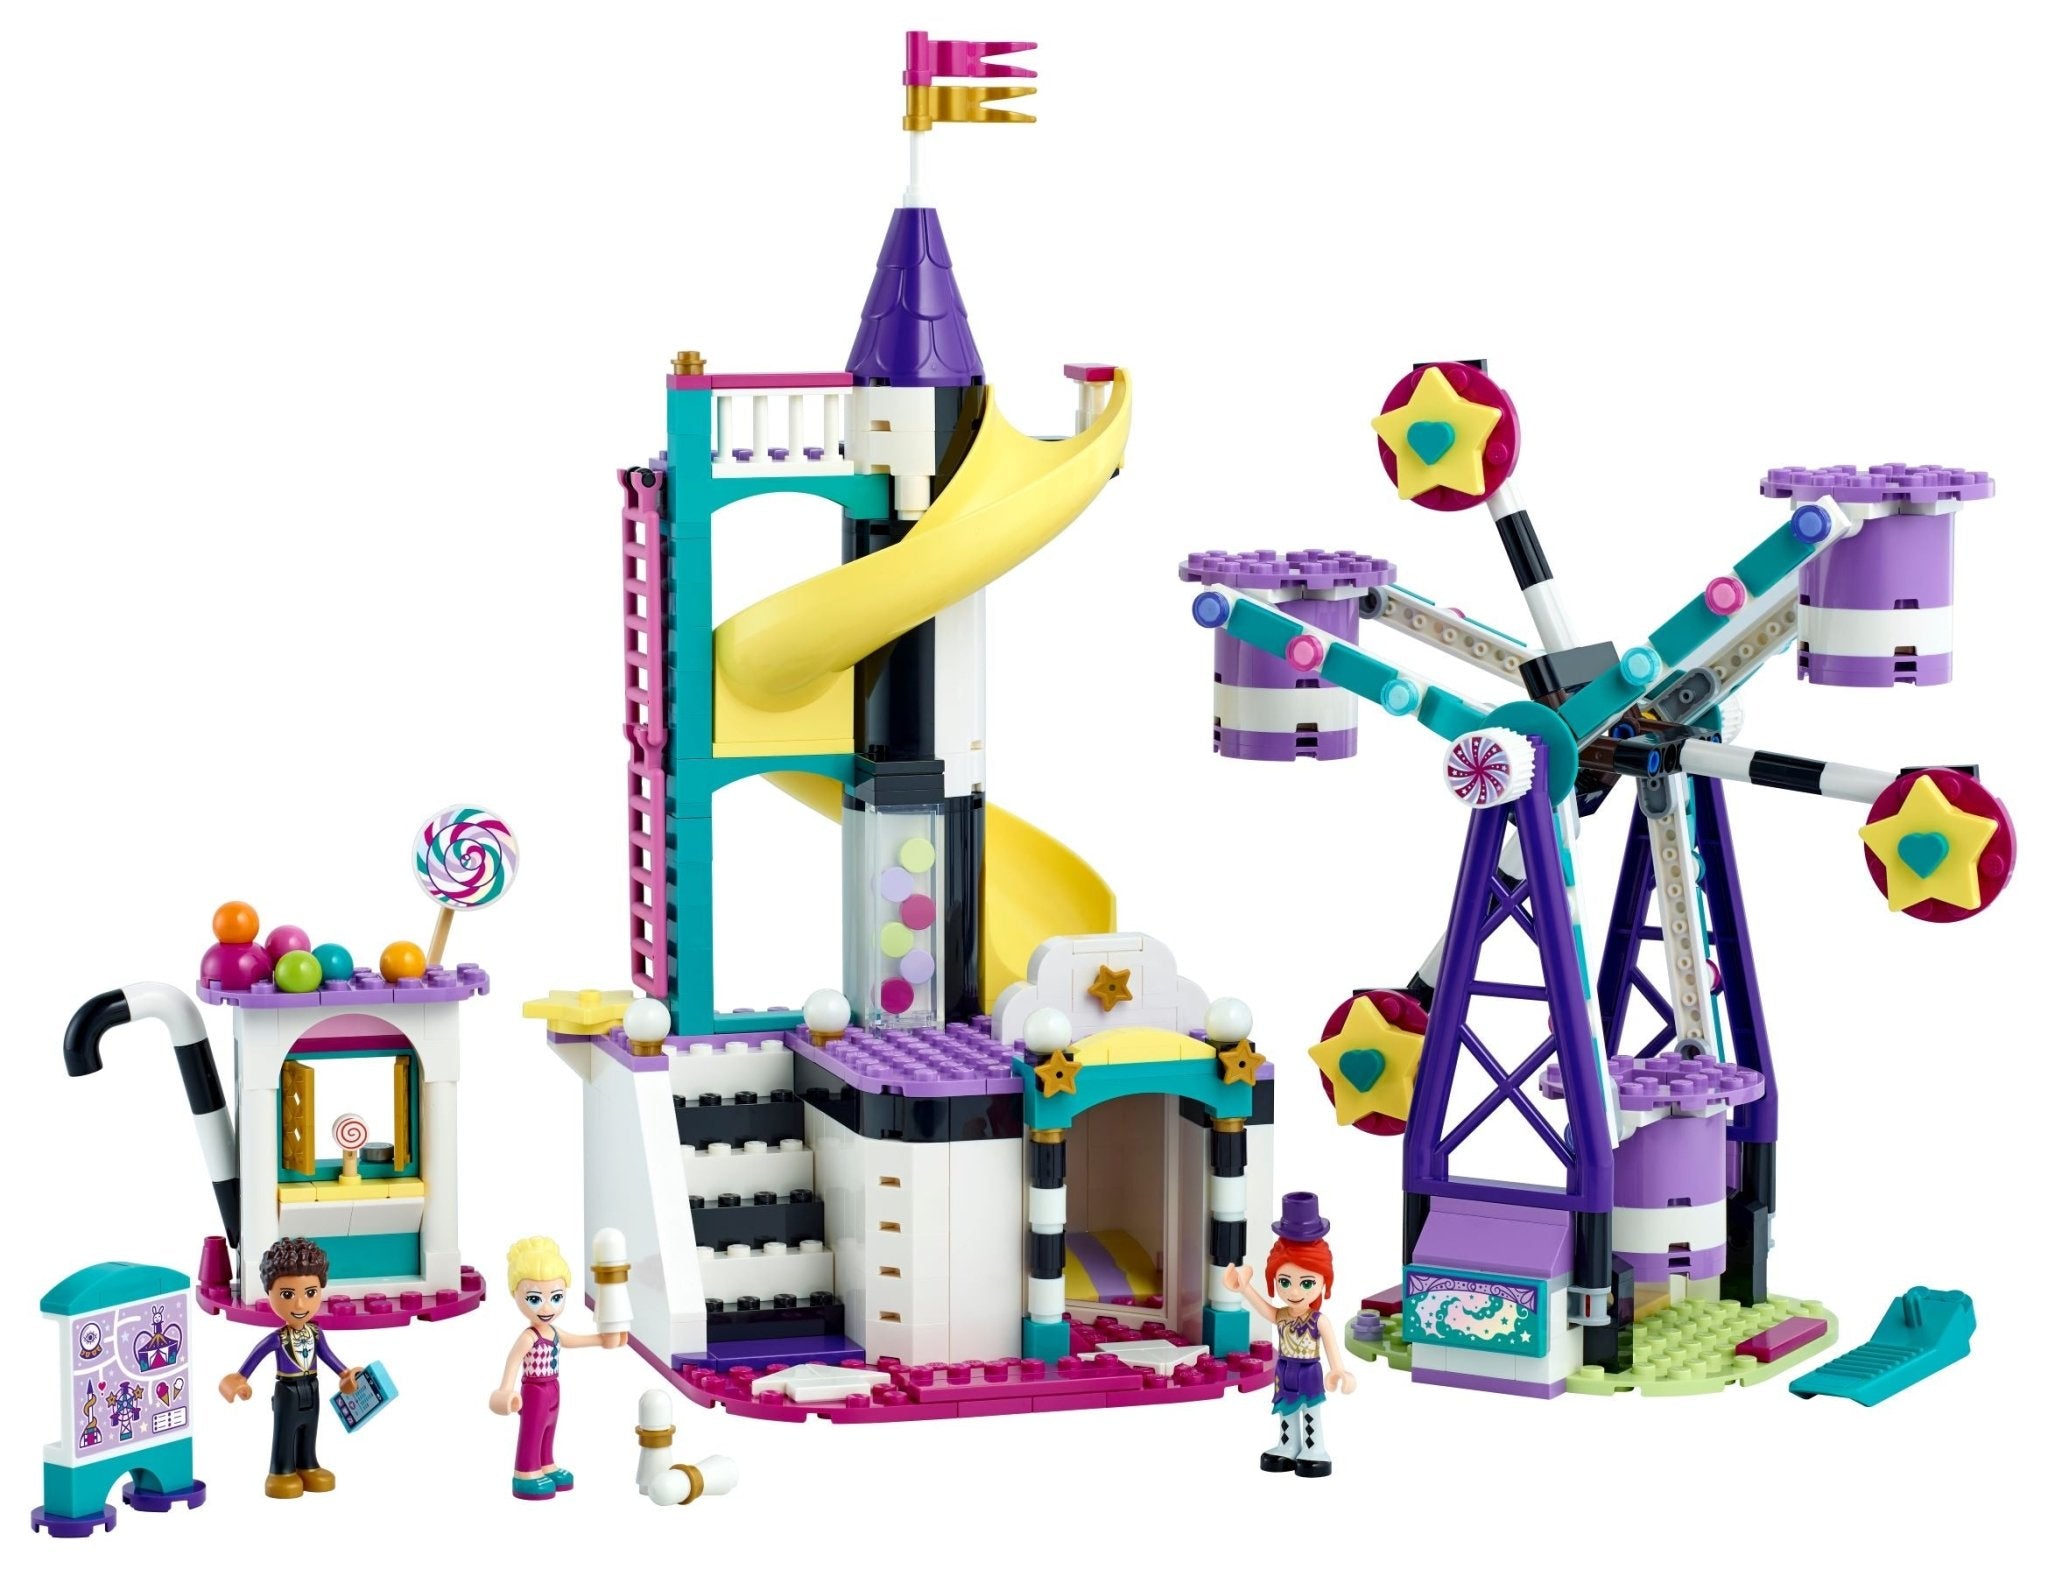 Lego Magical Ferris Wheel and Slide Building Toy - ANB Baby -Lego Ferris Wheel set